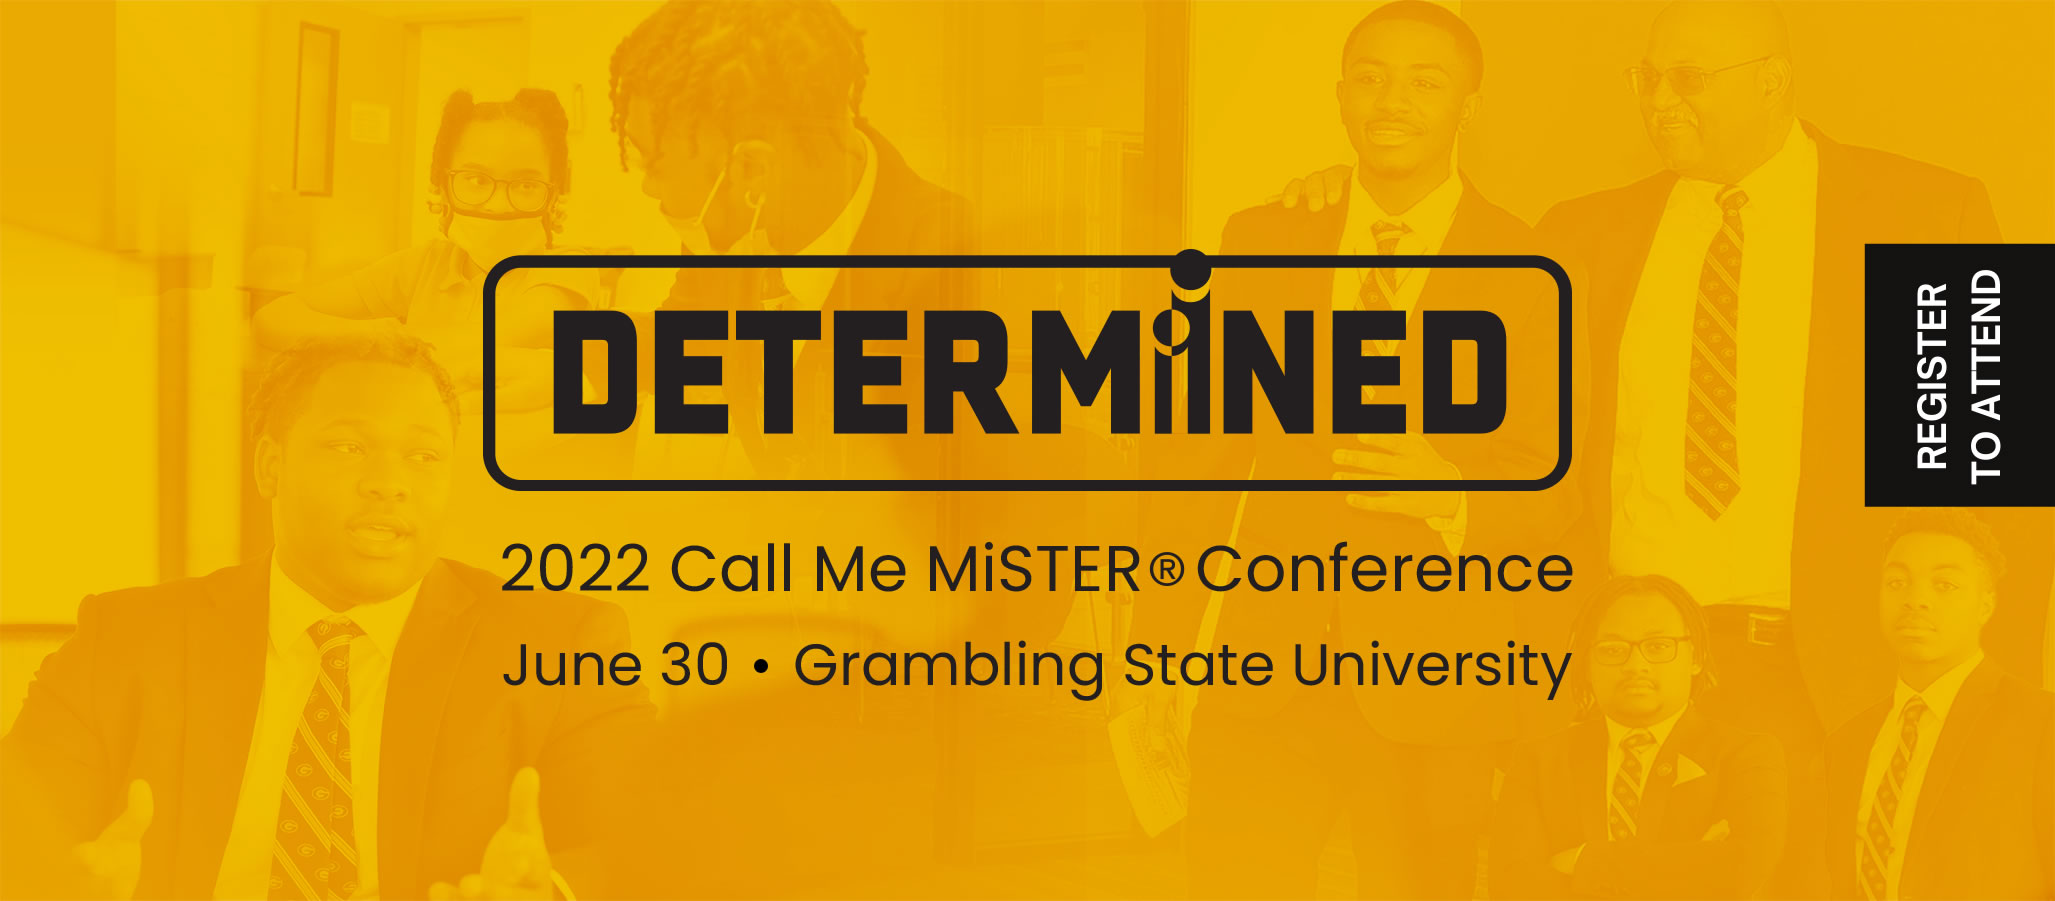 Call Me Mister Program Conference @ Fredrick C. Hobdy Assembly Center